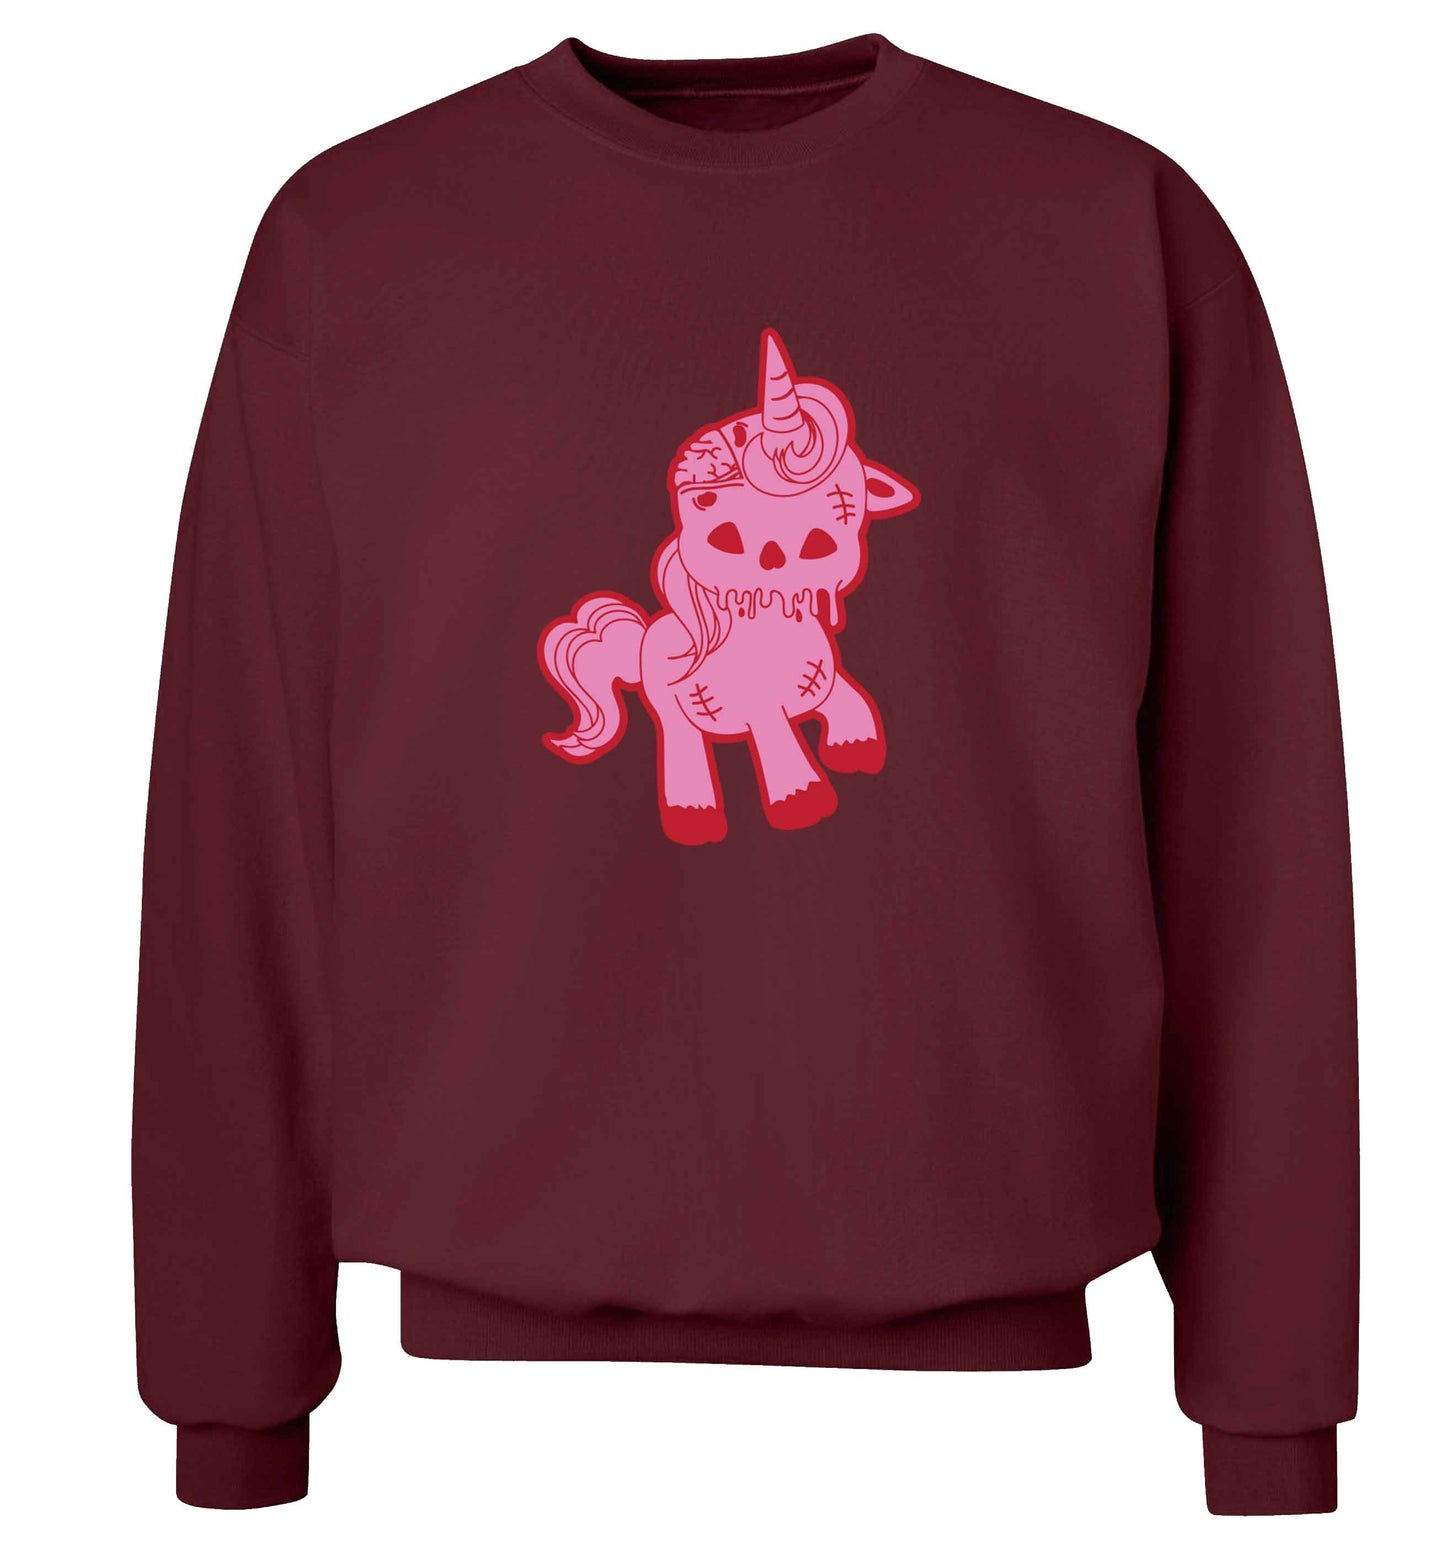 Zombie unicorn zombiecorn adult's unisex maroon sweater 2XL